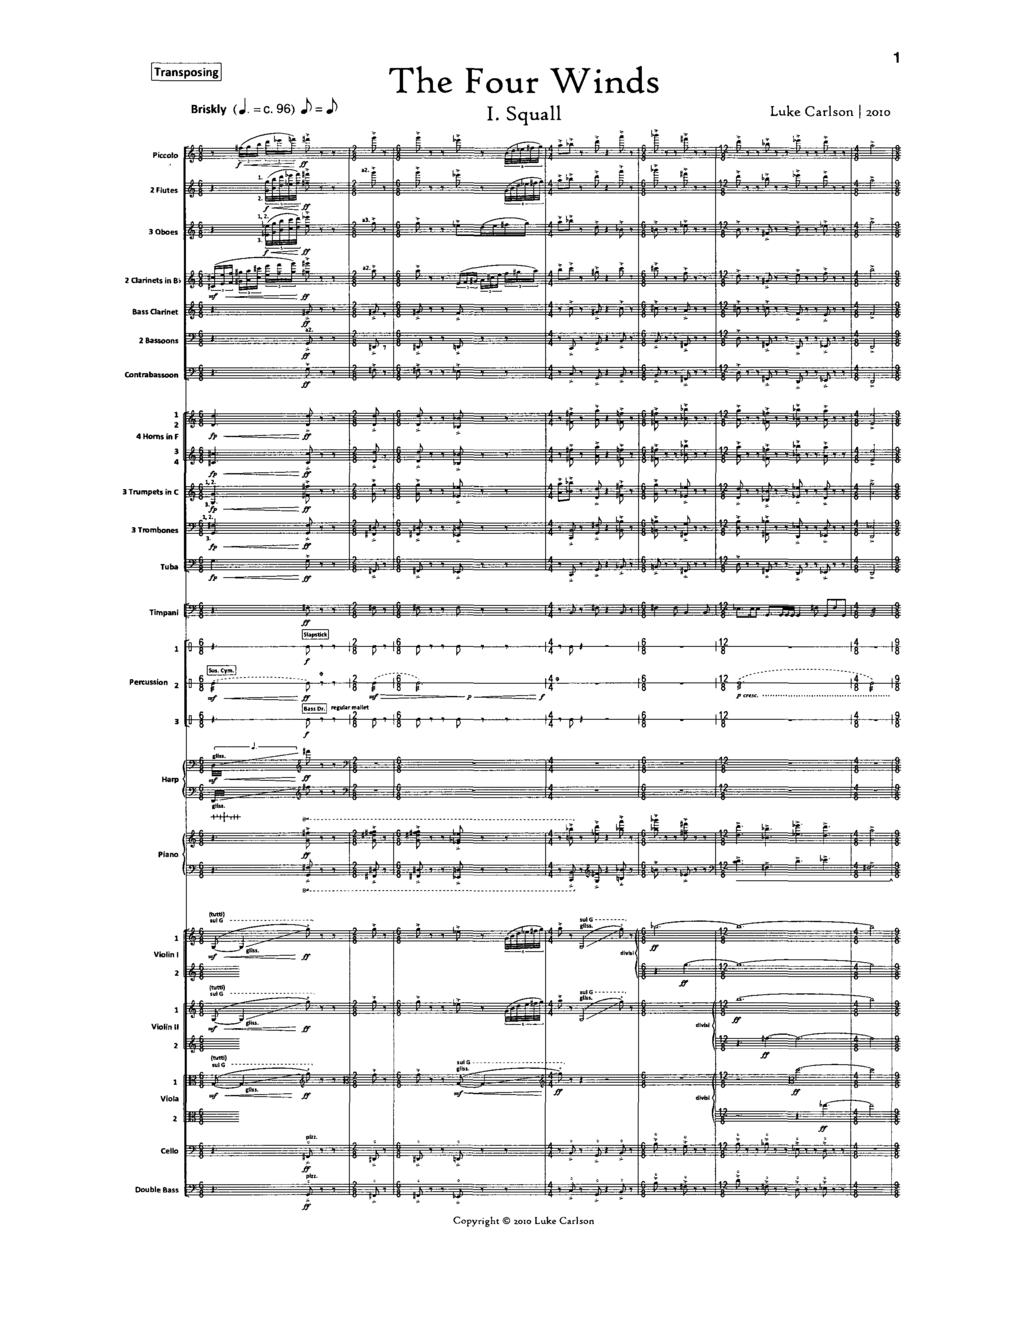 [Transposing Briskly (J. =c. 96) J> = J> The Four Winds I. Squall Luke Carlson [ 2010 2 Clarinets in Bt> Bass Clarinet Contrabassoon 0 "n 12 r,,»f * - J T :^" s j '] np~h" r.f J) a* n,» If UNi?